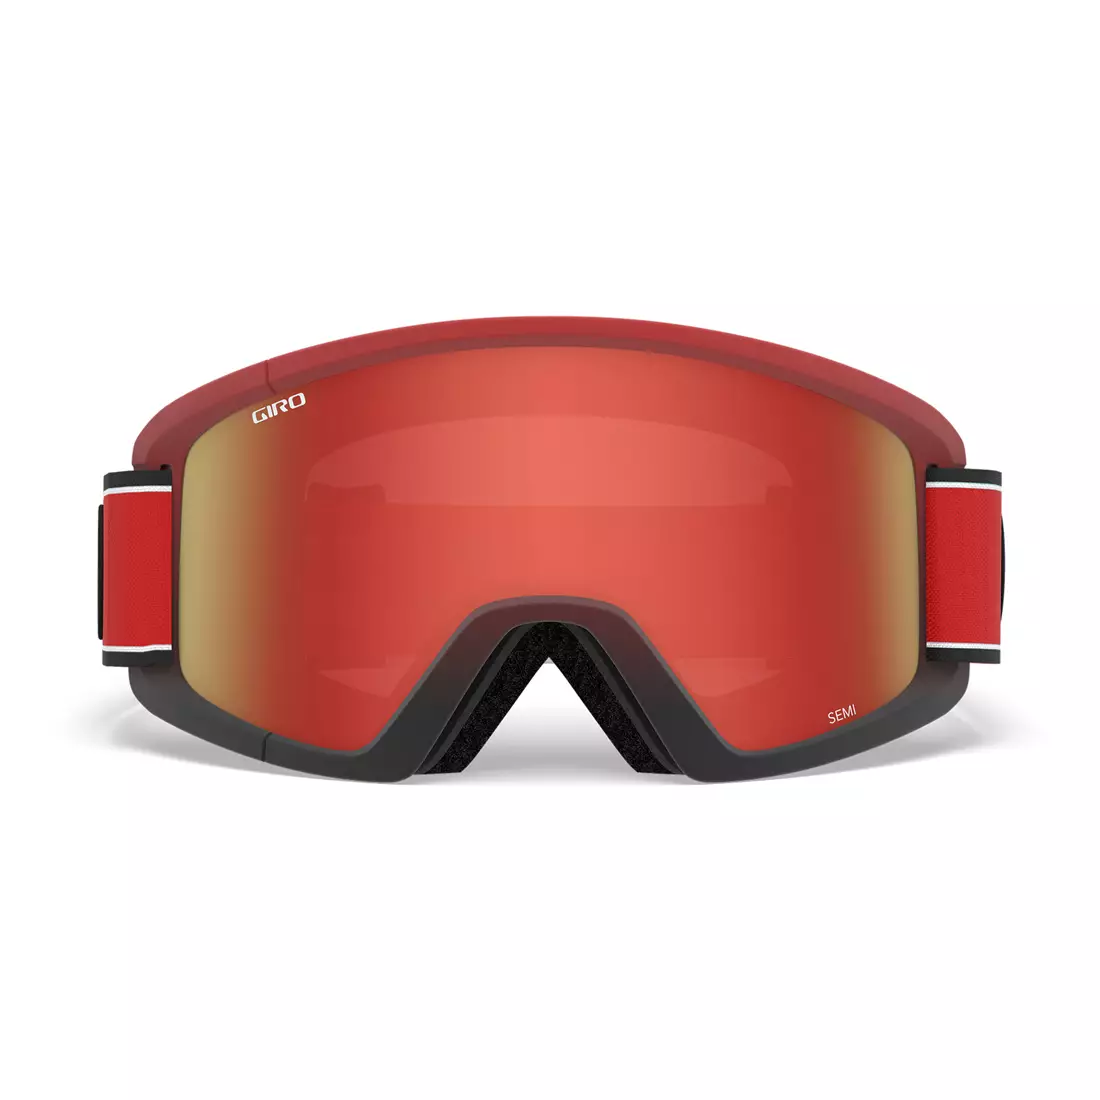 Ochelari de iarnă pentru schi / snowboard GIRO SEMI RED ELEMENT GR-7105390